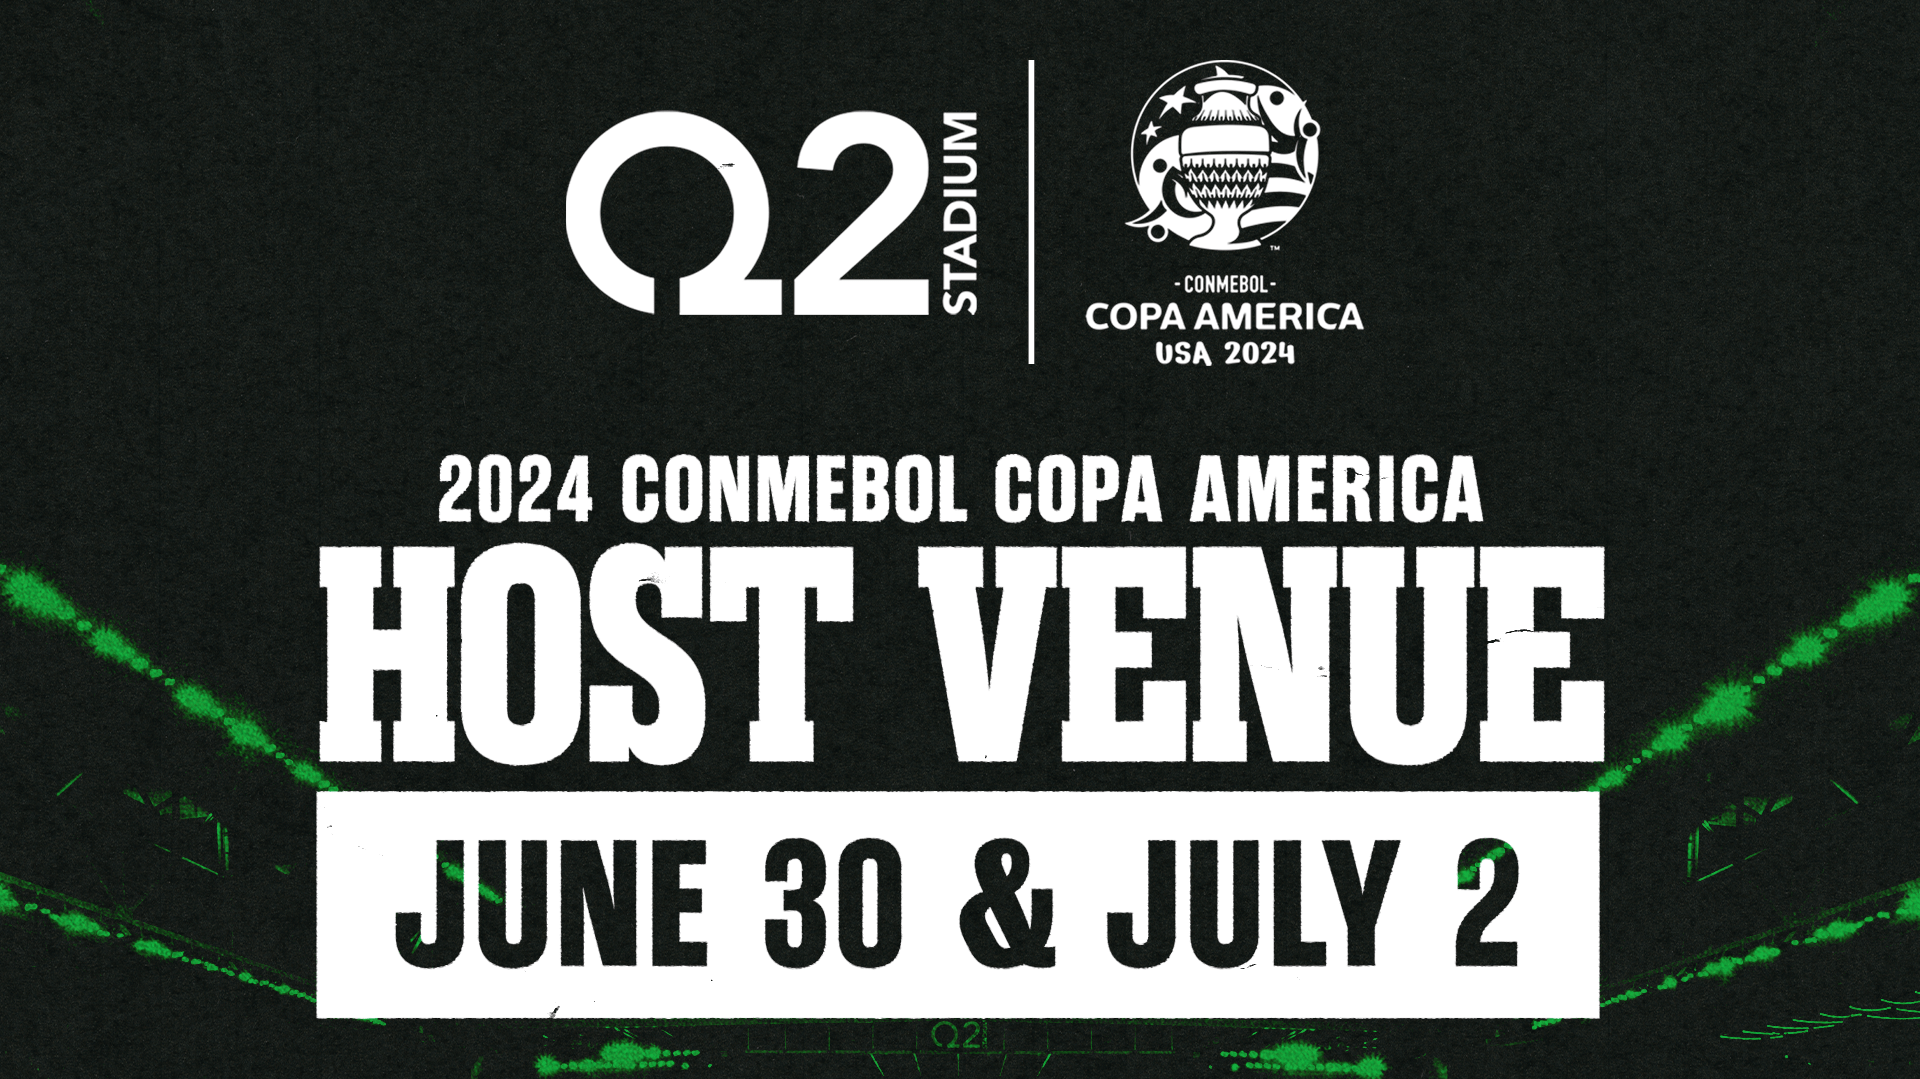 Q2 Stadium Named As A Host Venue For The Conmebol Copa